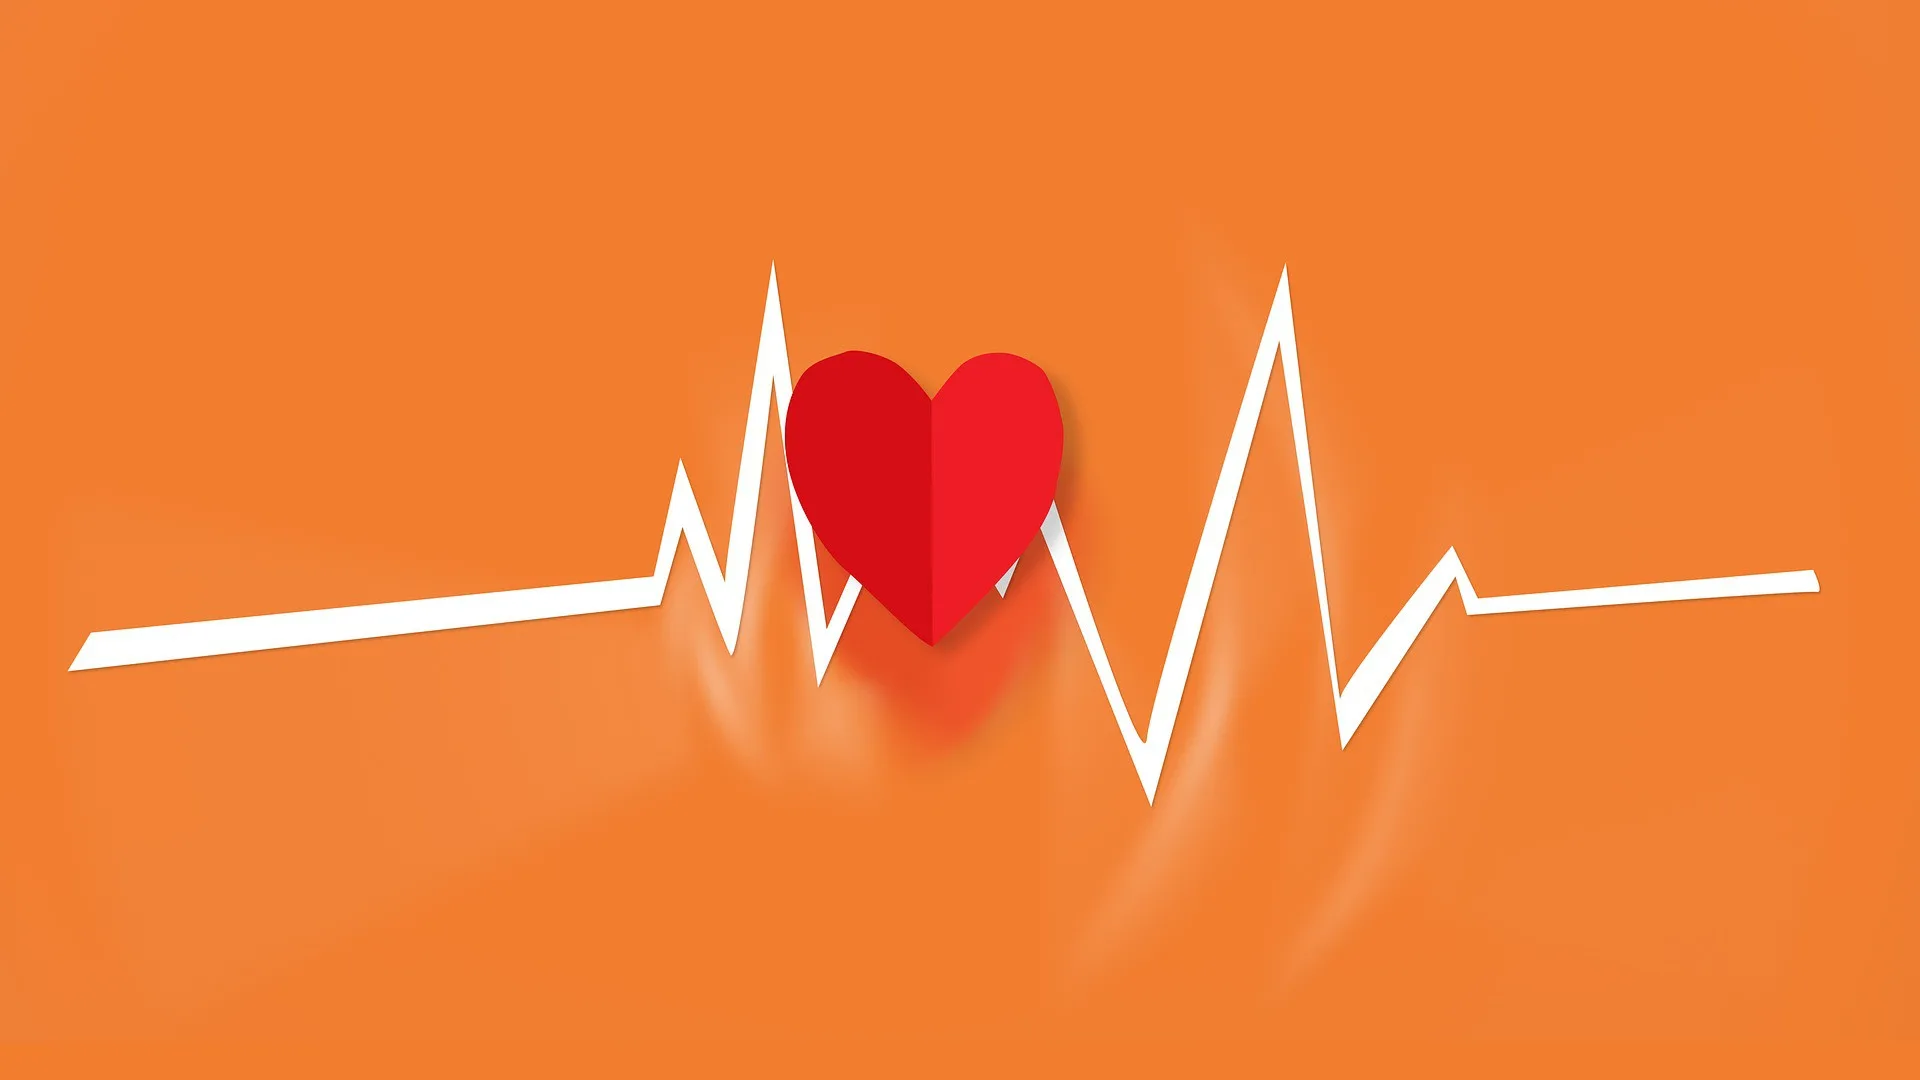 bionicke srdce srdcova pumpa bezdrotove nabijanie lekarsky prevrat jpg